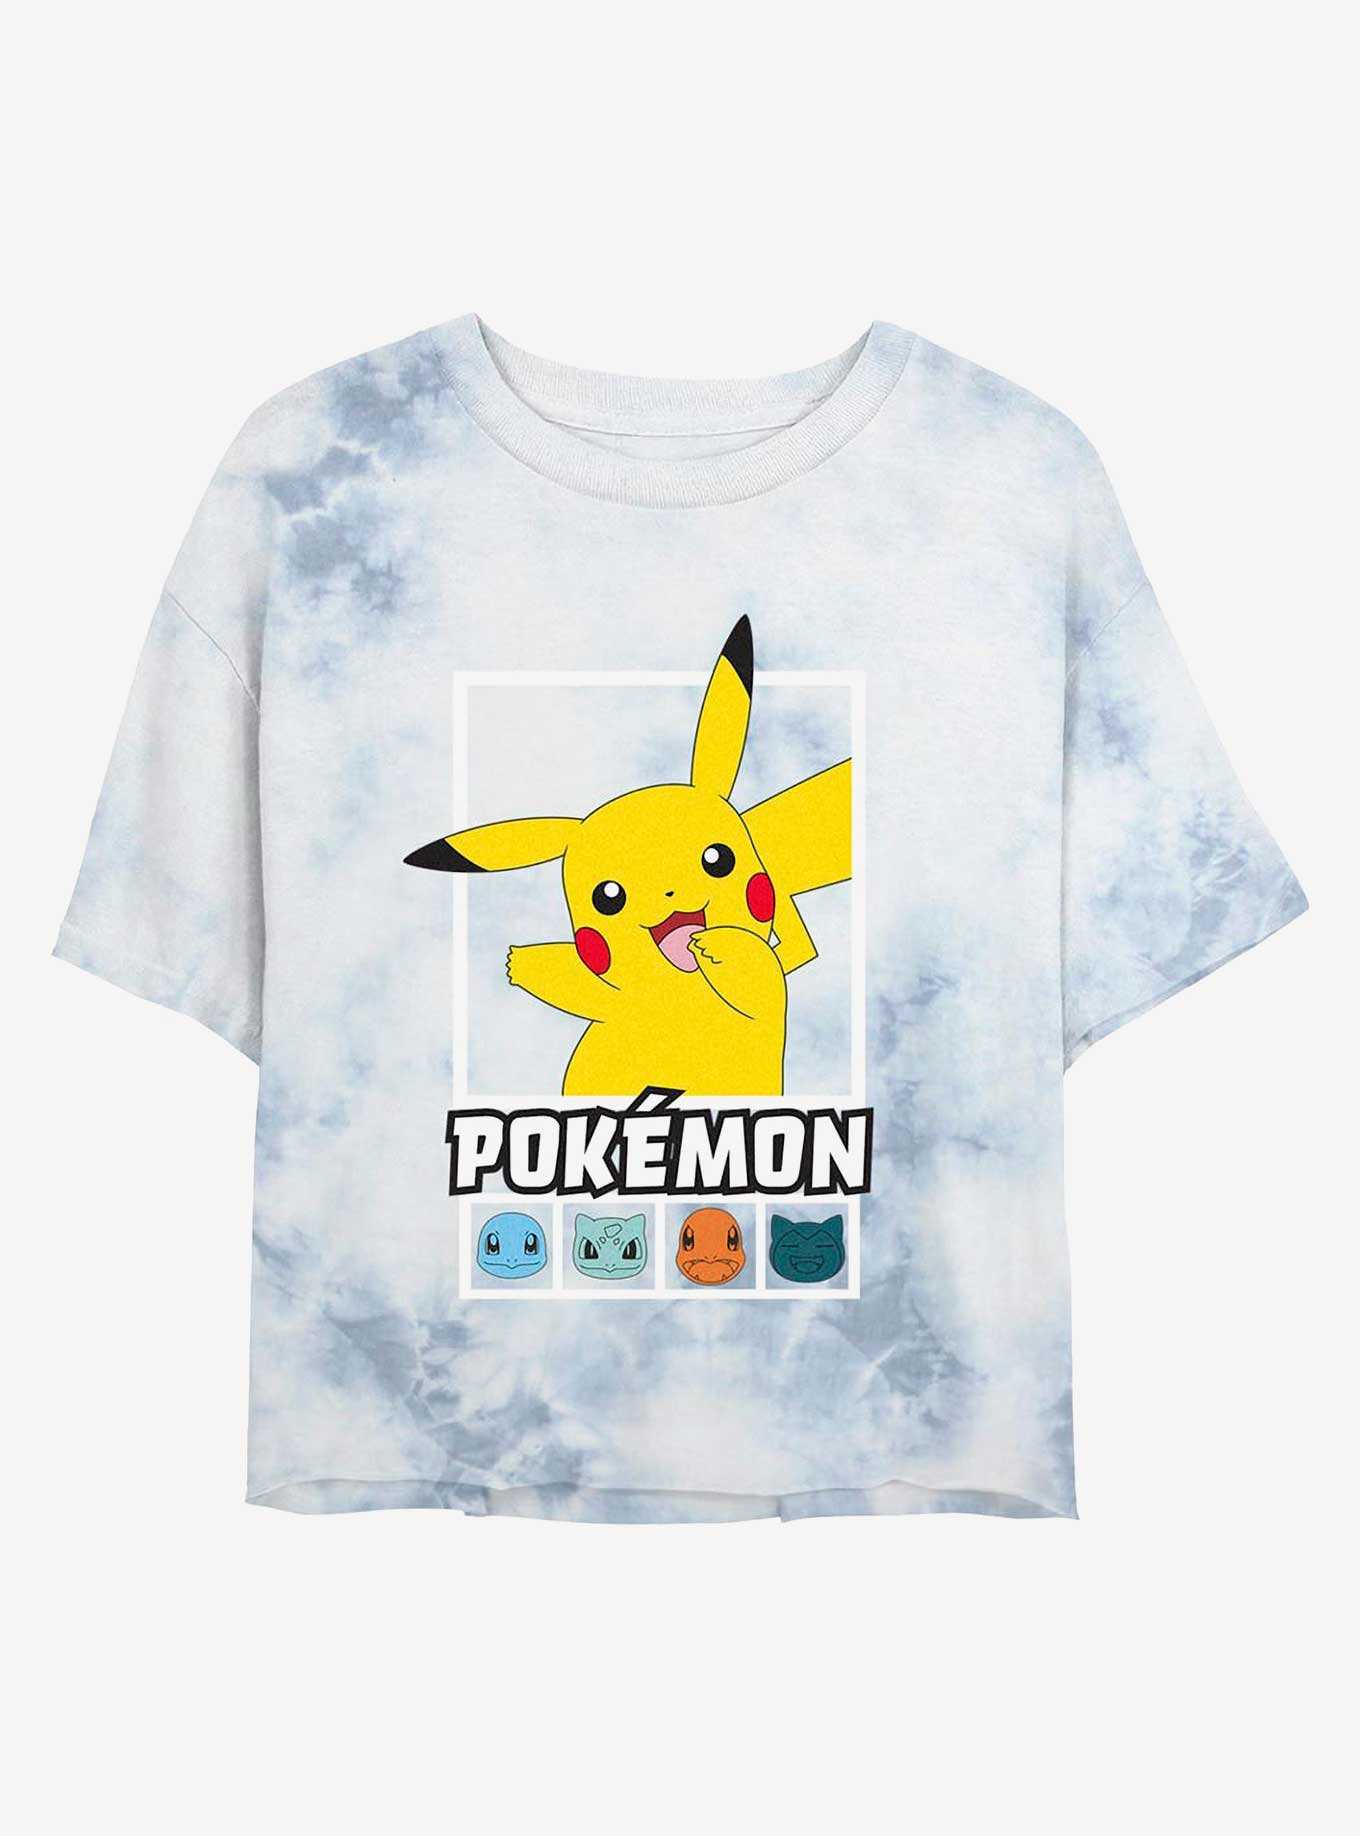 Pokemon Battle Lineup Pikachu, Squirtle, Bulbasaur, Charmander, & Snorlax Tie-Dye Girls Crop T-Shirt, , hi-res